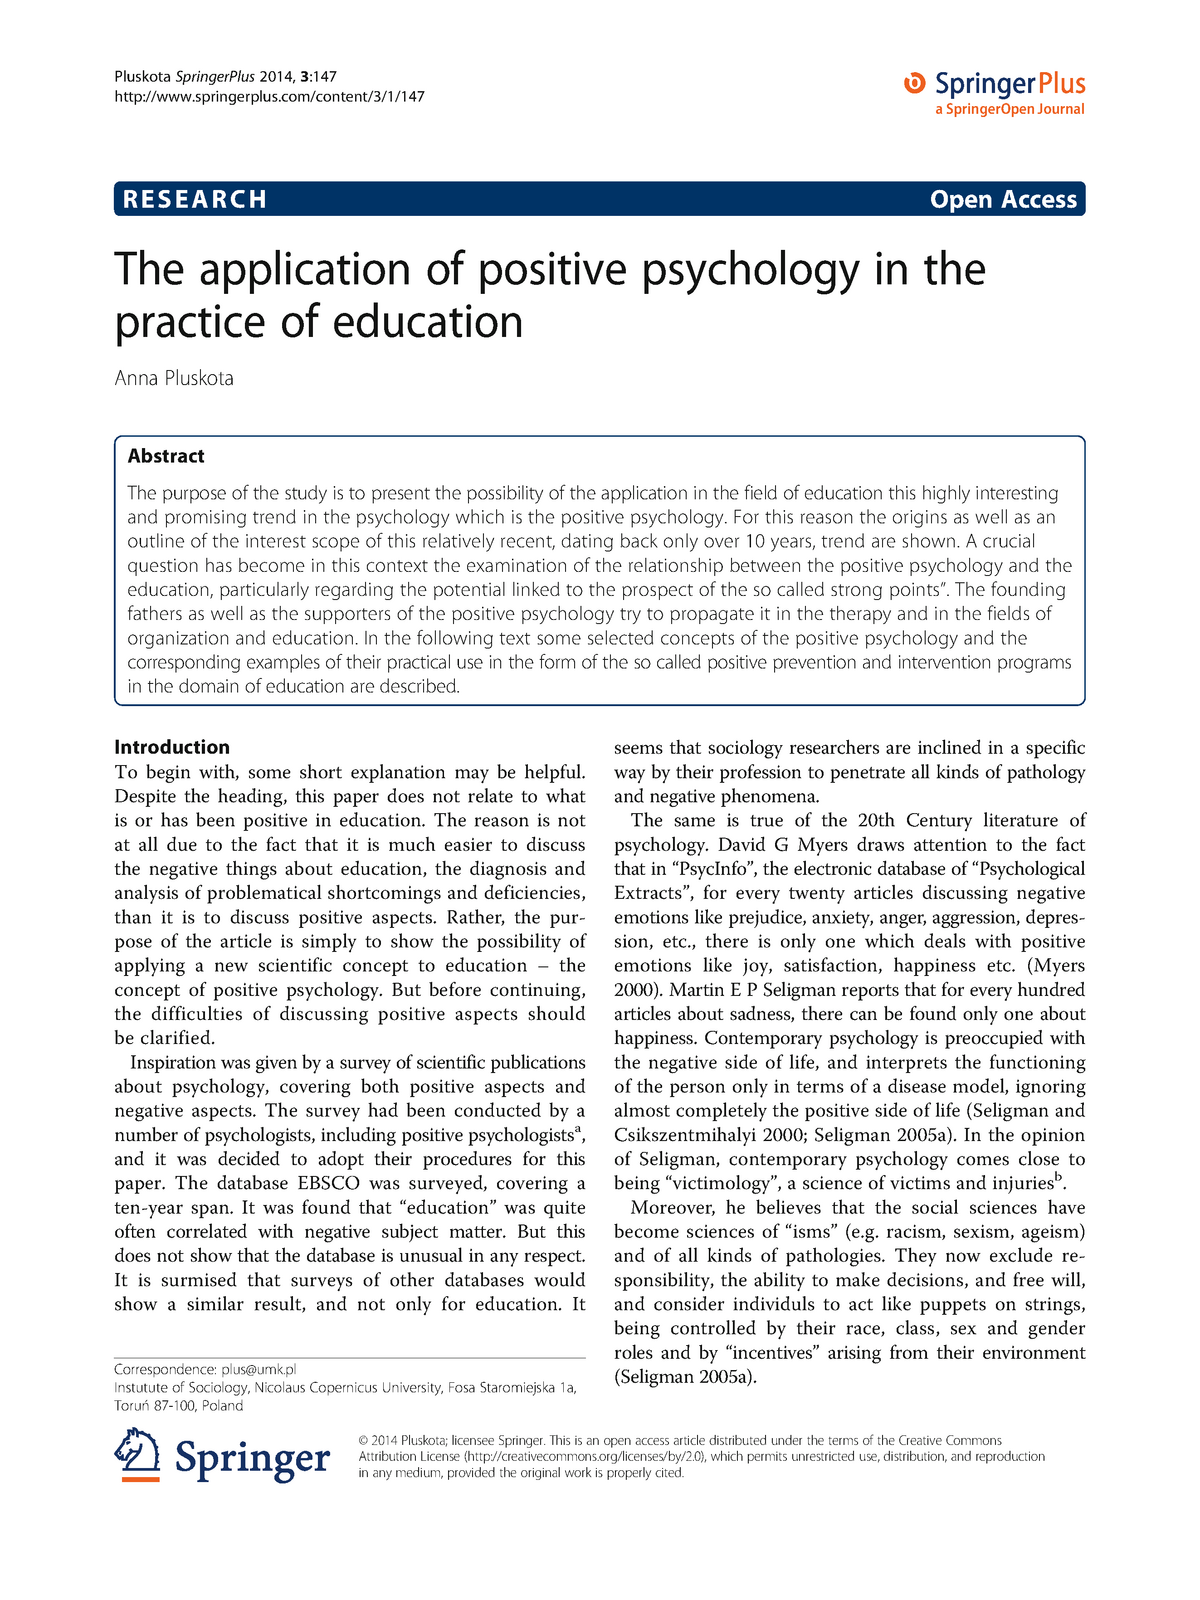 positive psychology research paper